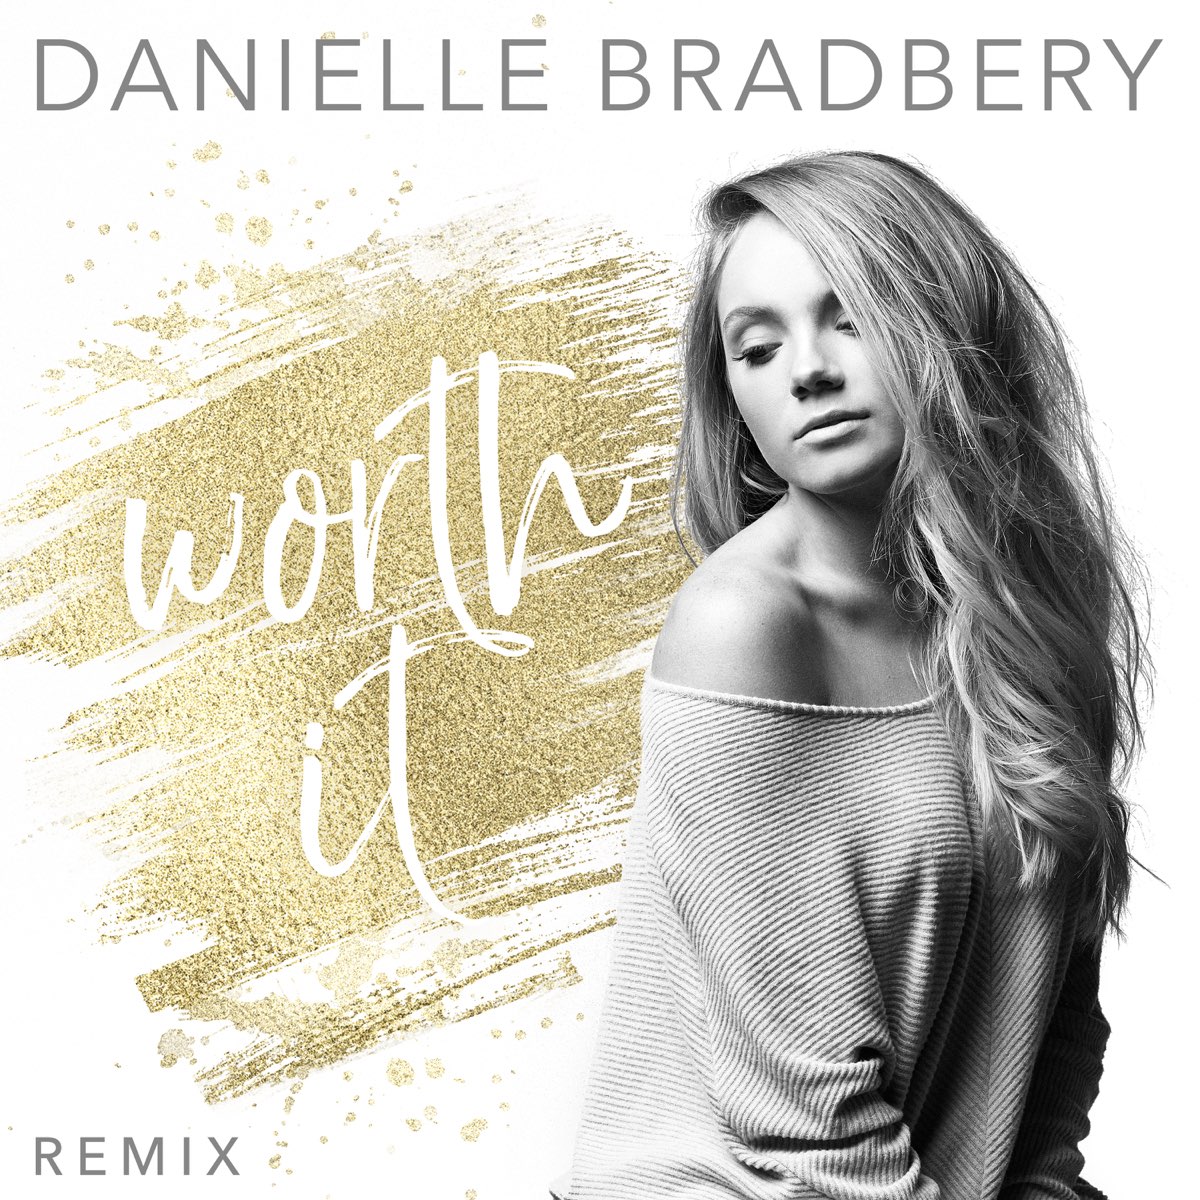 Слушайте в Apple Music: Worth It (Remix) - Single (Danielle Bradbery). 